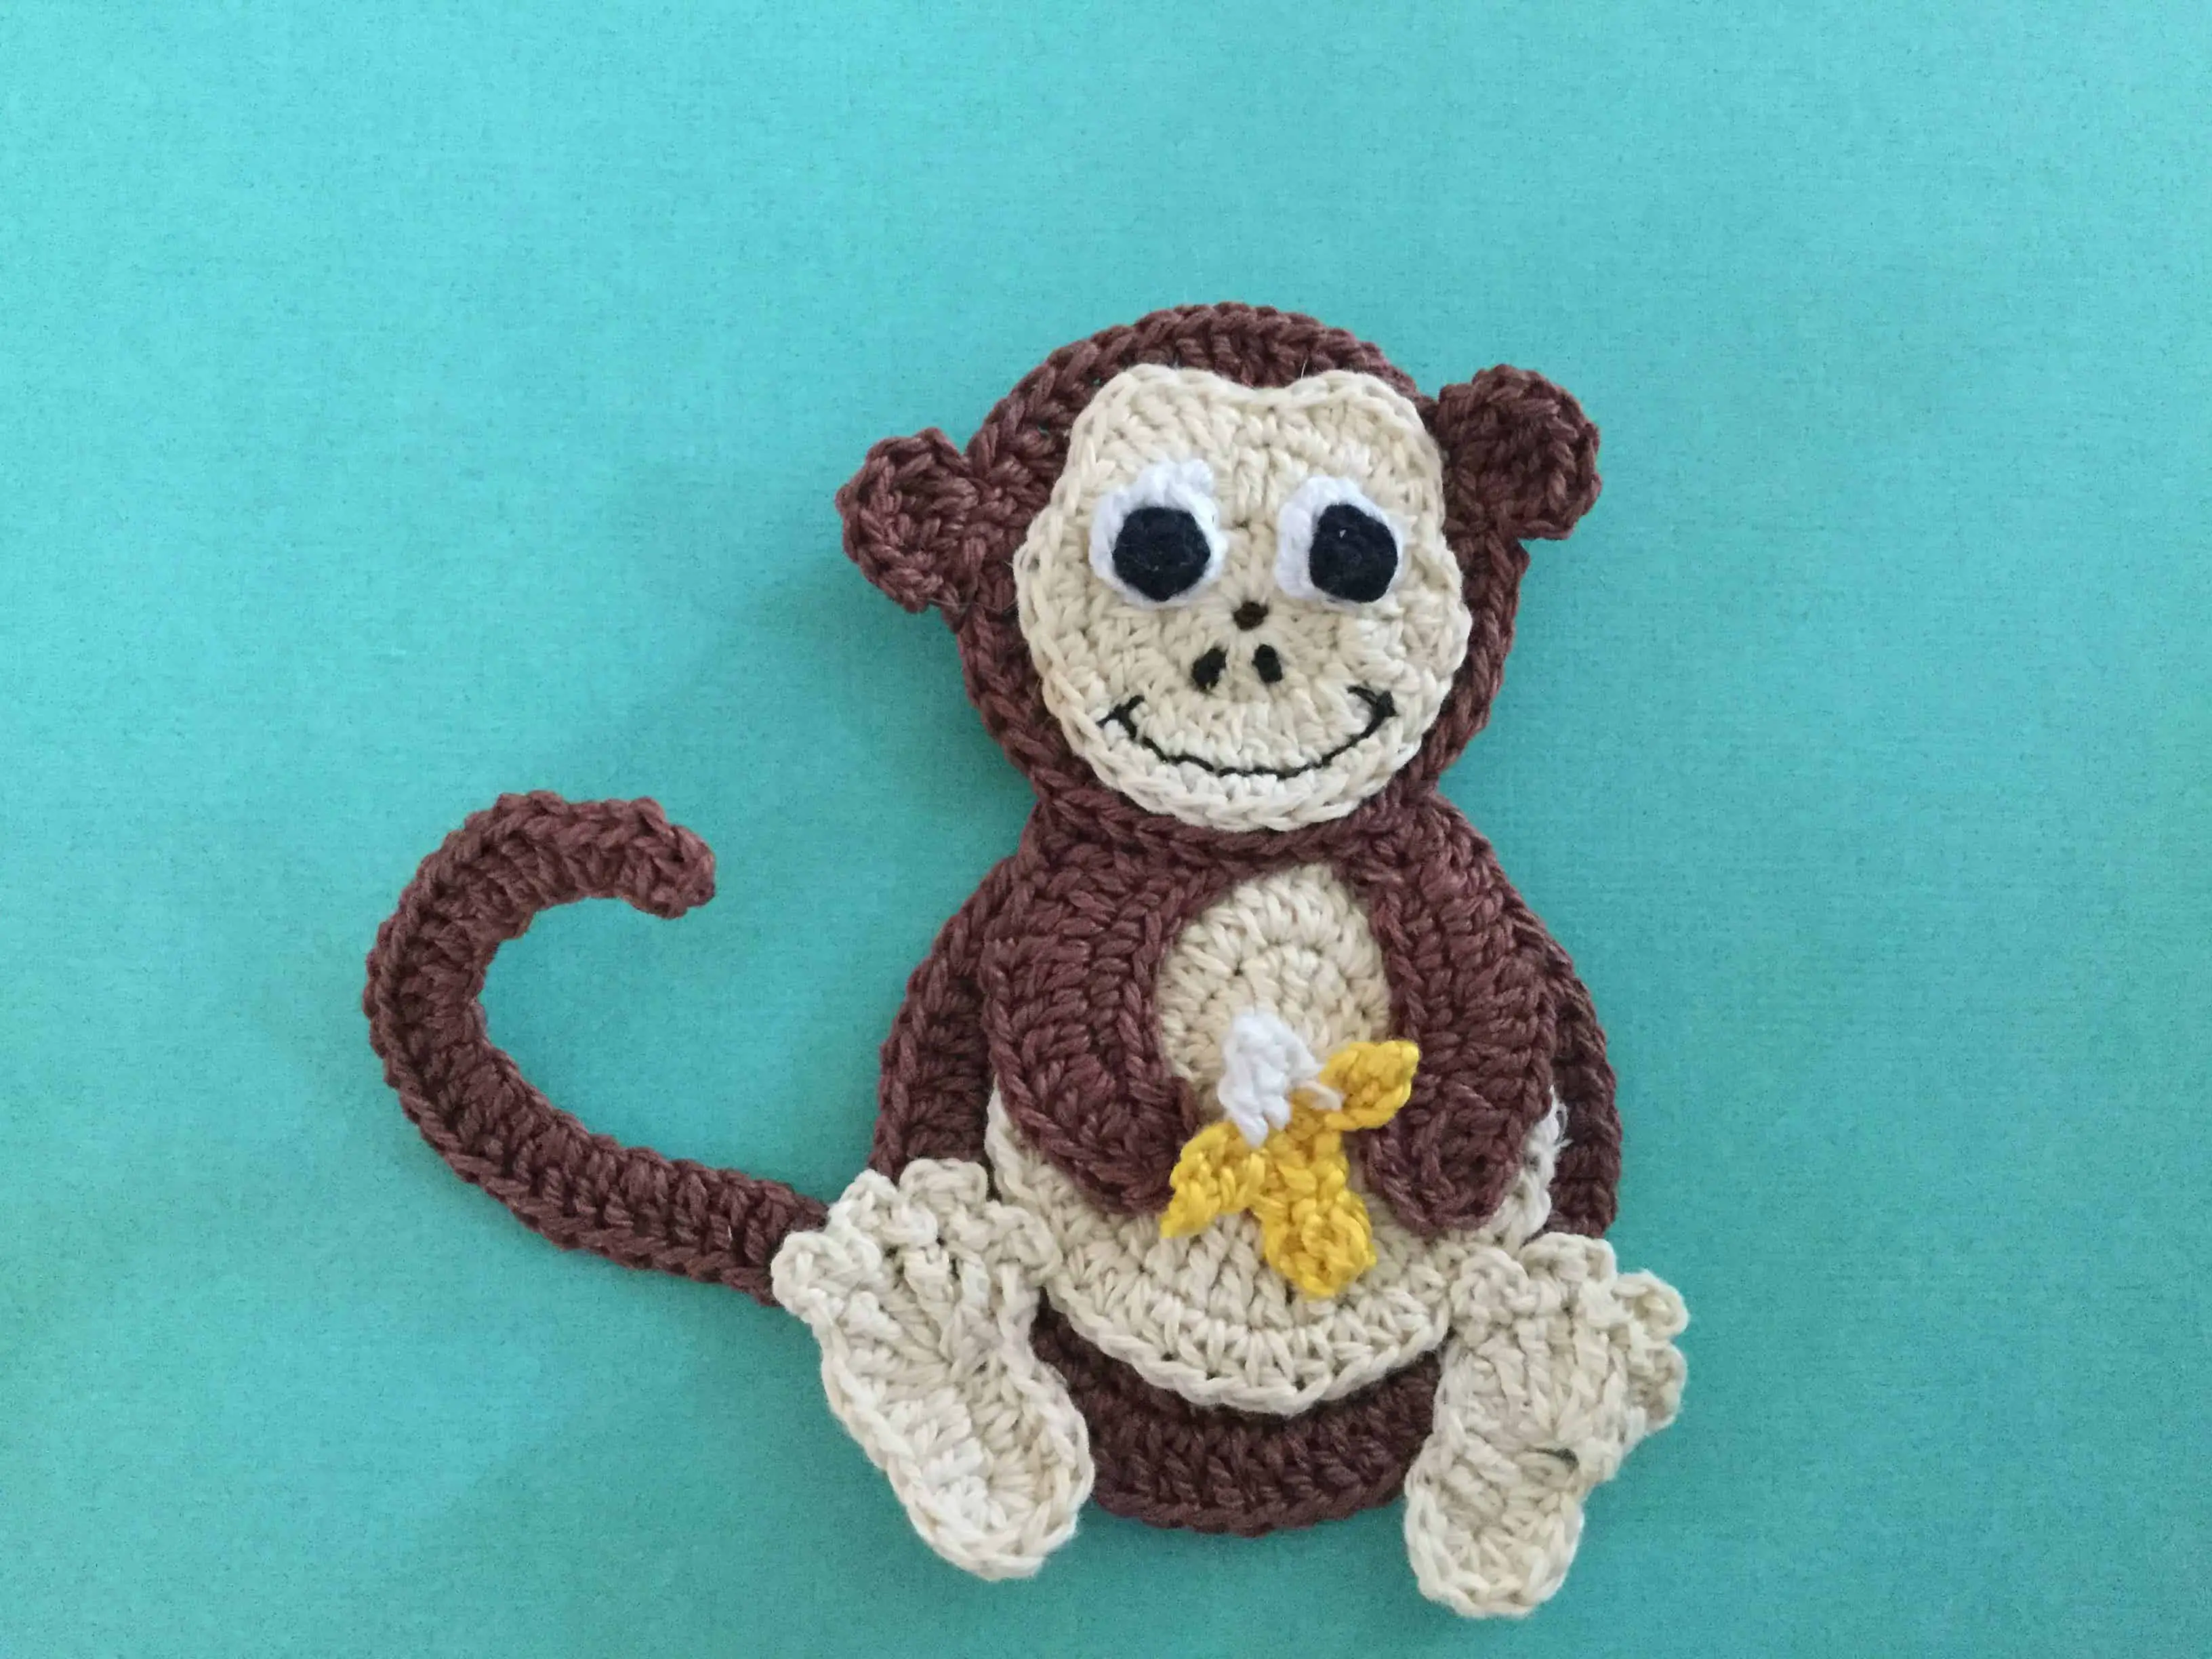 Finished crochet monkey landscape